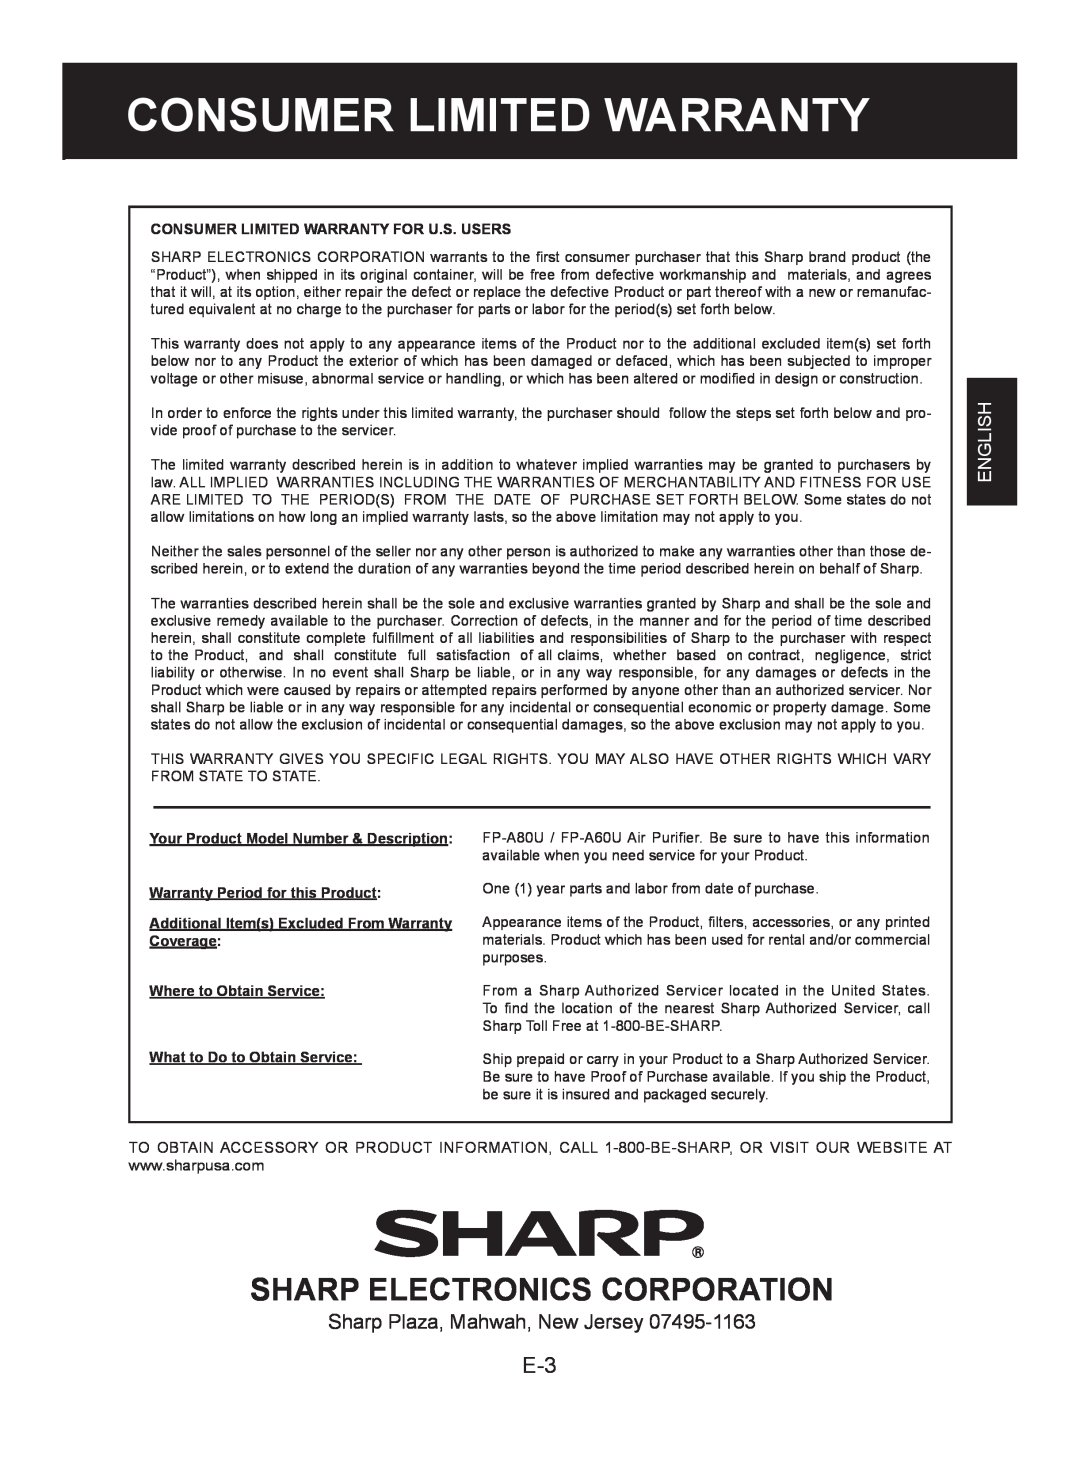 Sharp FP-A80UW, FP-A60U Sharp Electronics Corporation, English, Consumer Limited Warranty For U.S. Users 